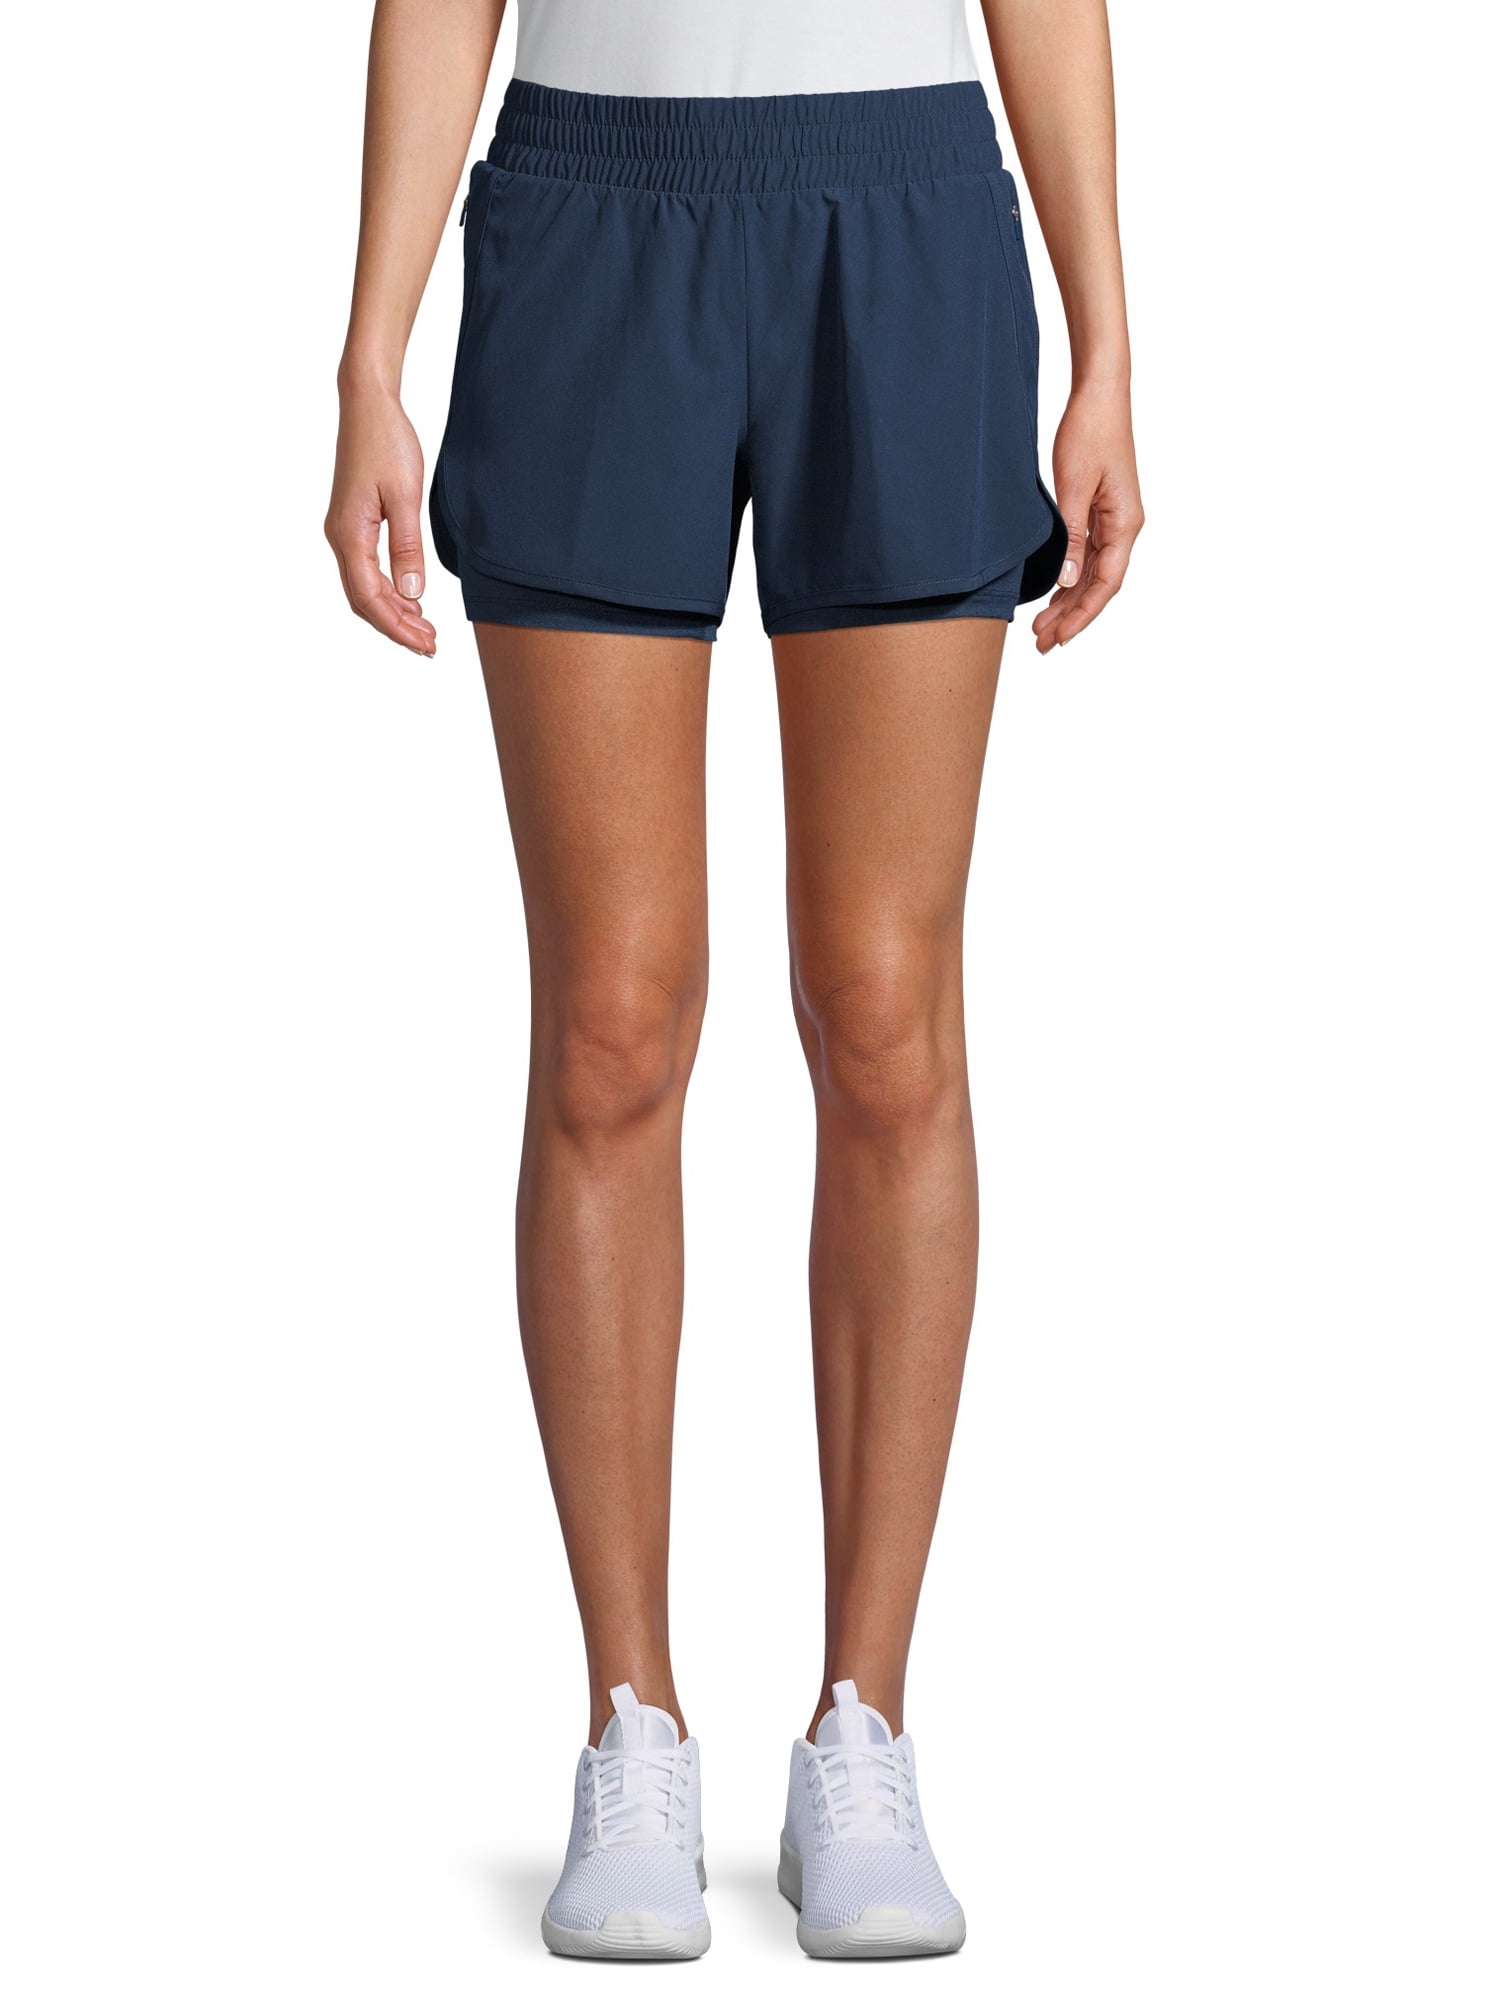 off brand lululemon shorts